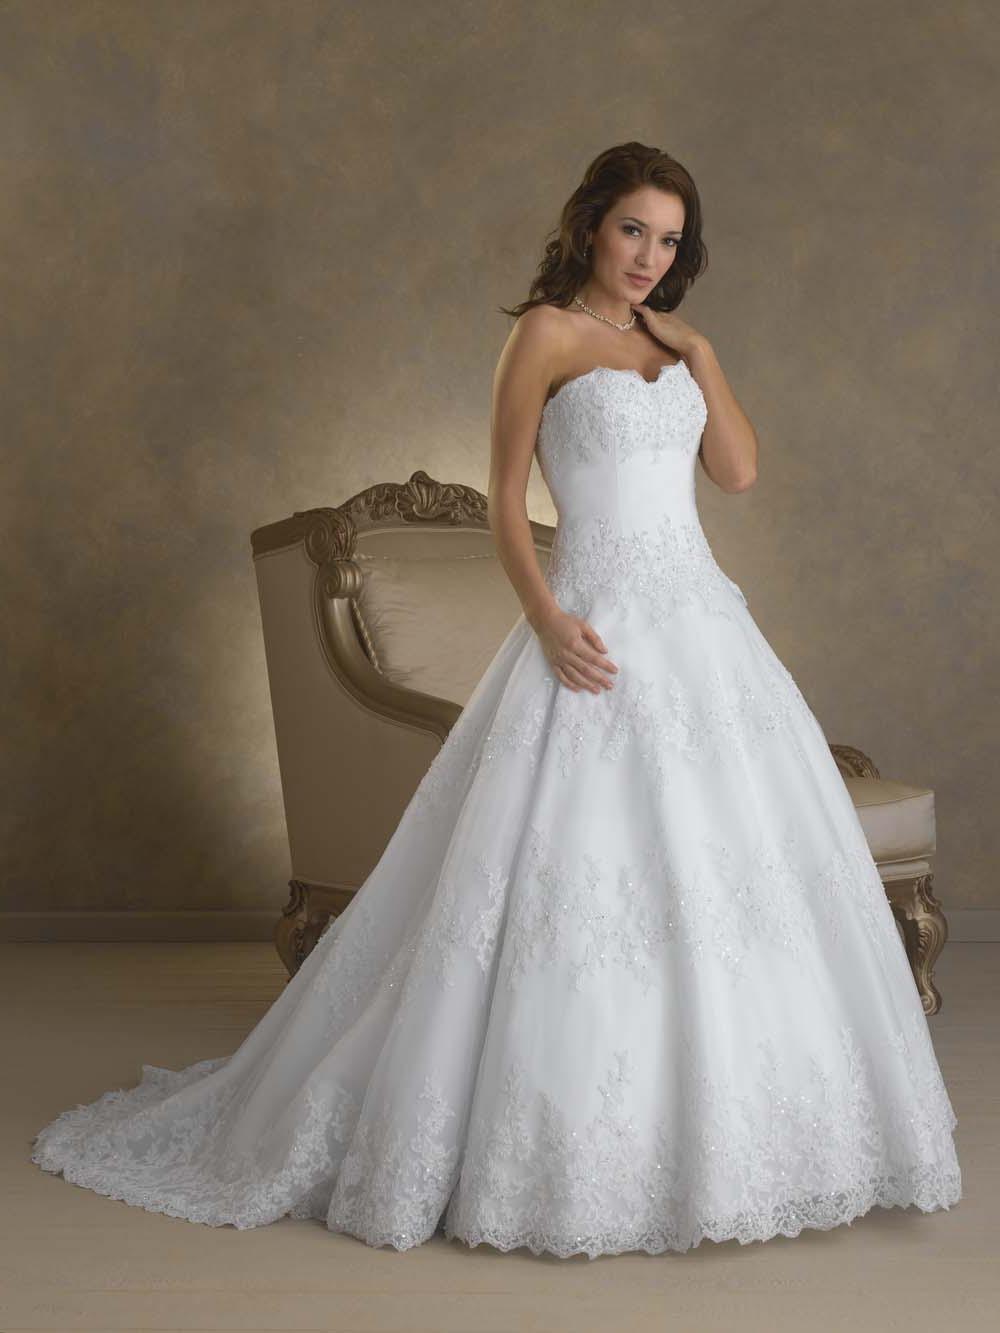 New style wedding dresses-